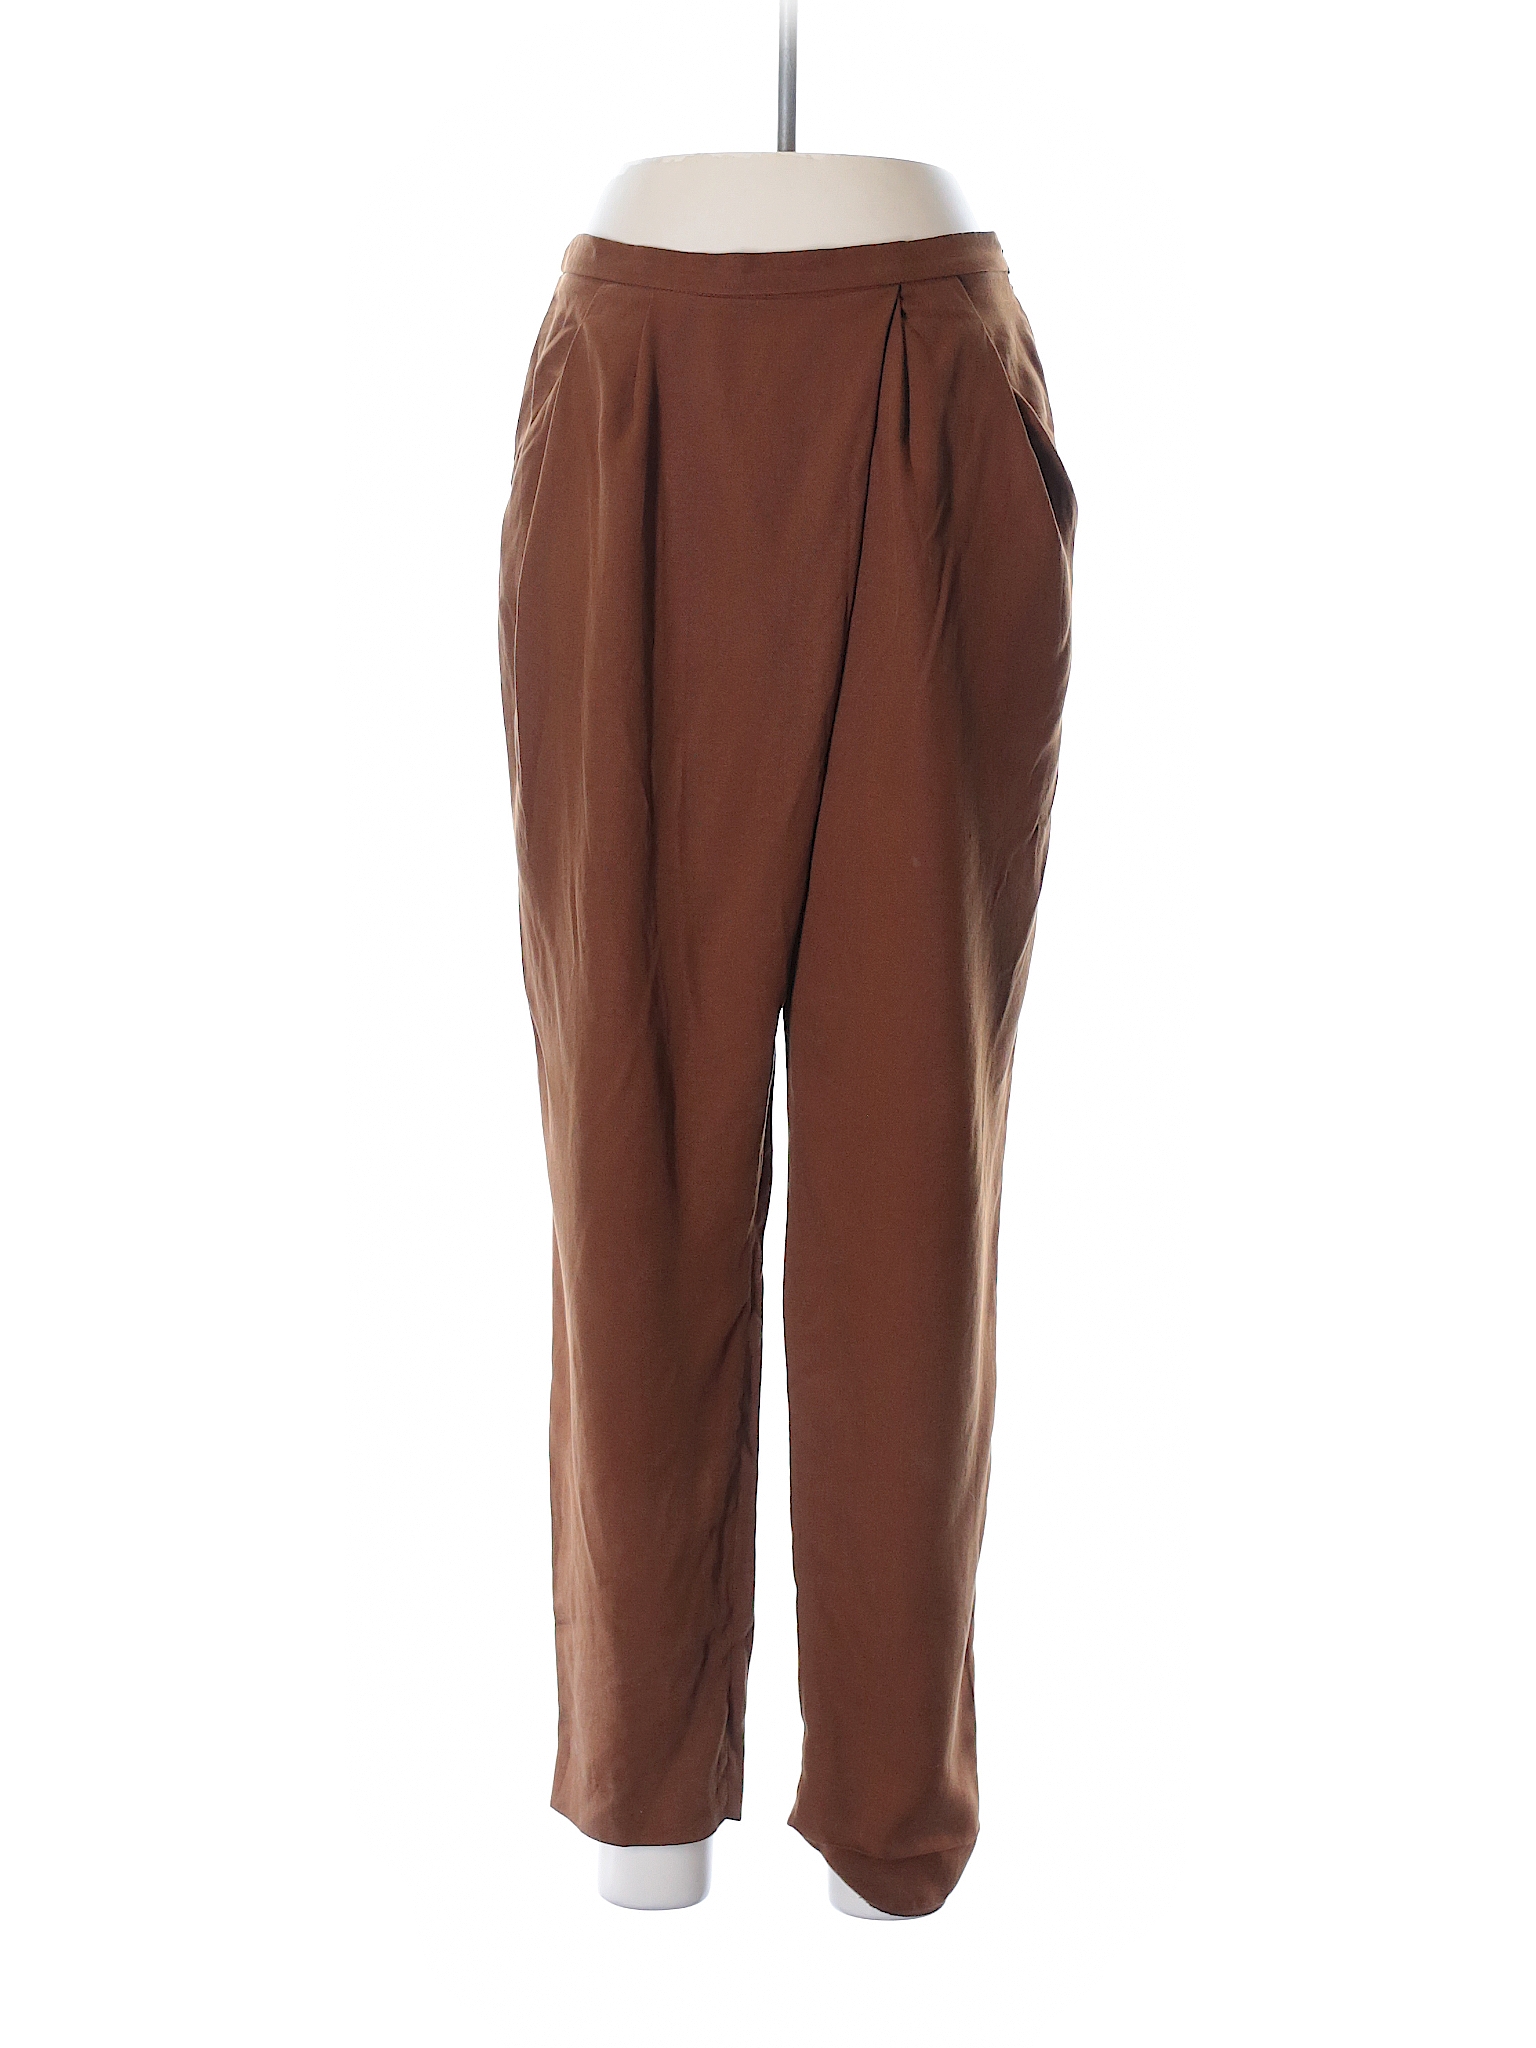 Zara Solid Brown Dress Pants Size M - 70% off | thredUP